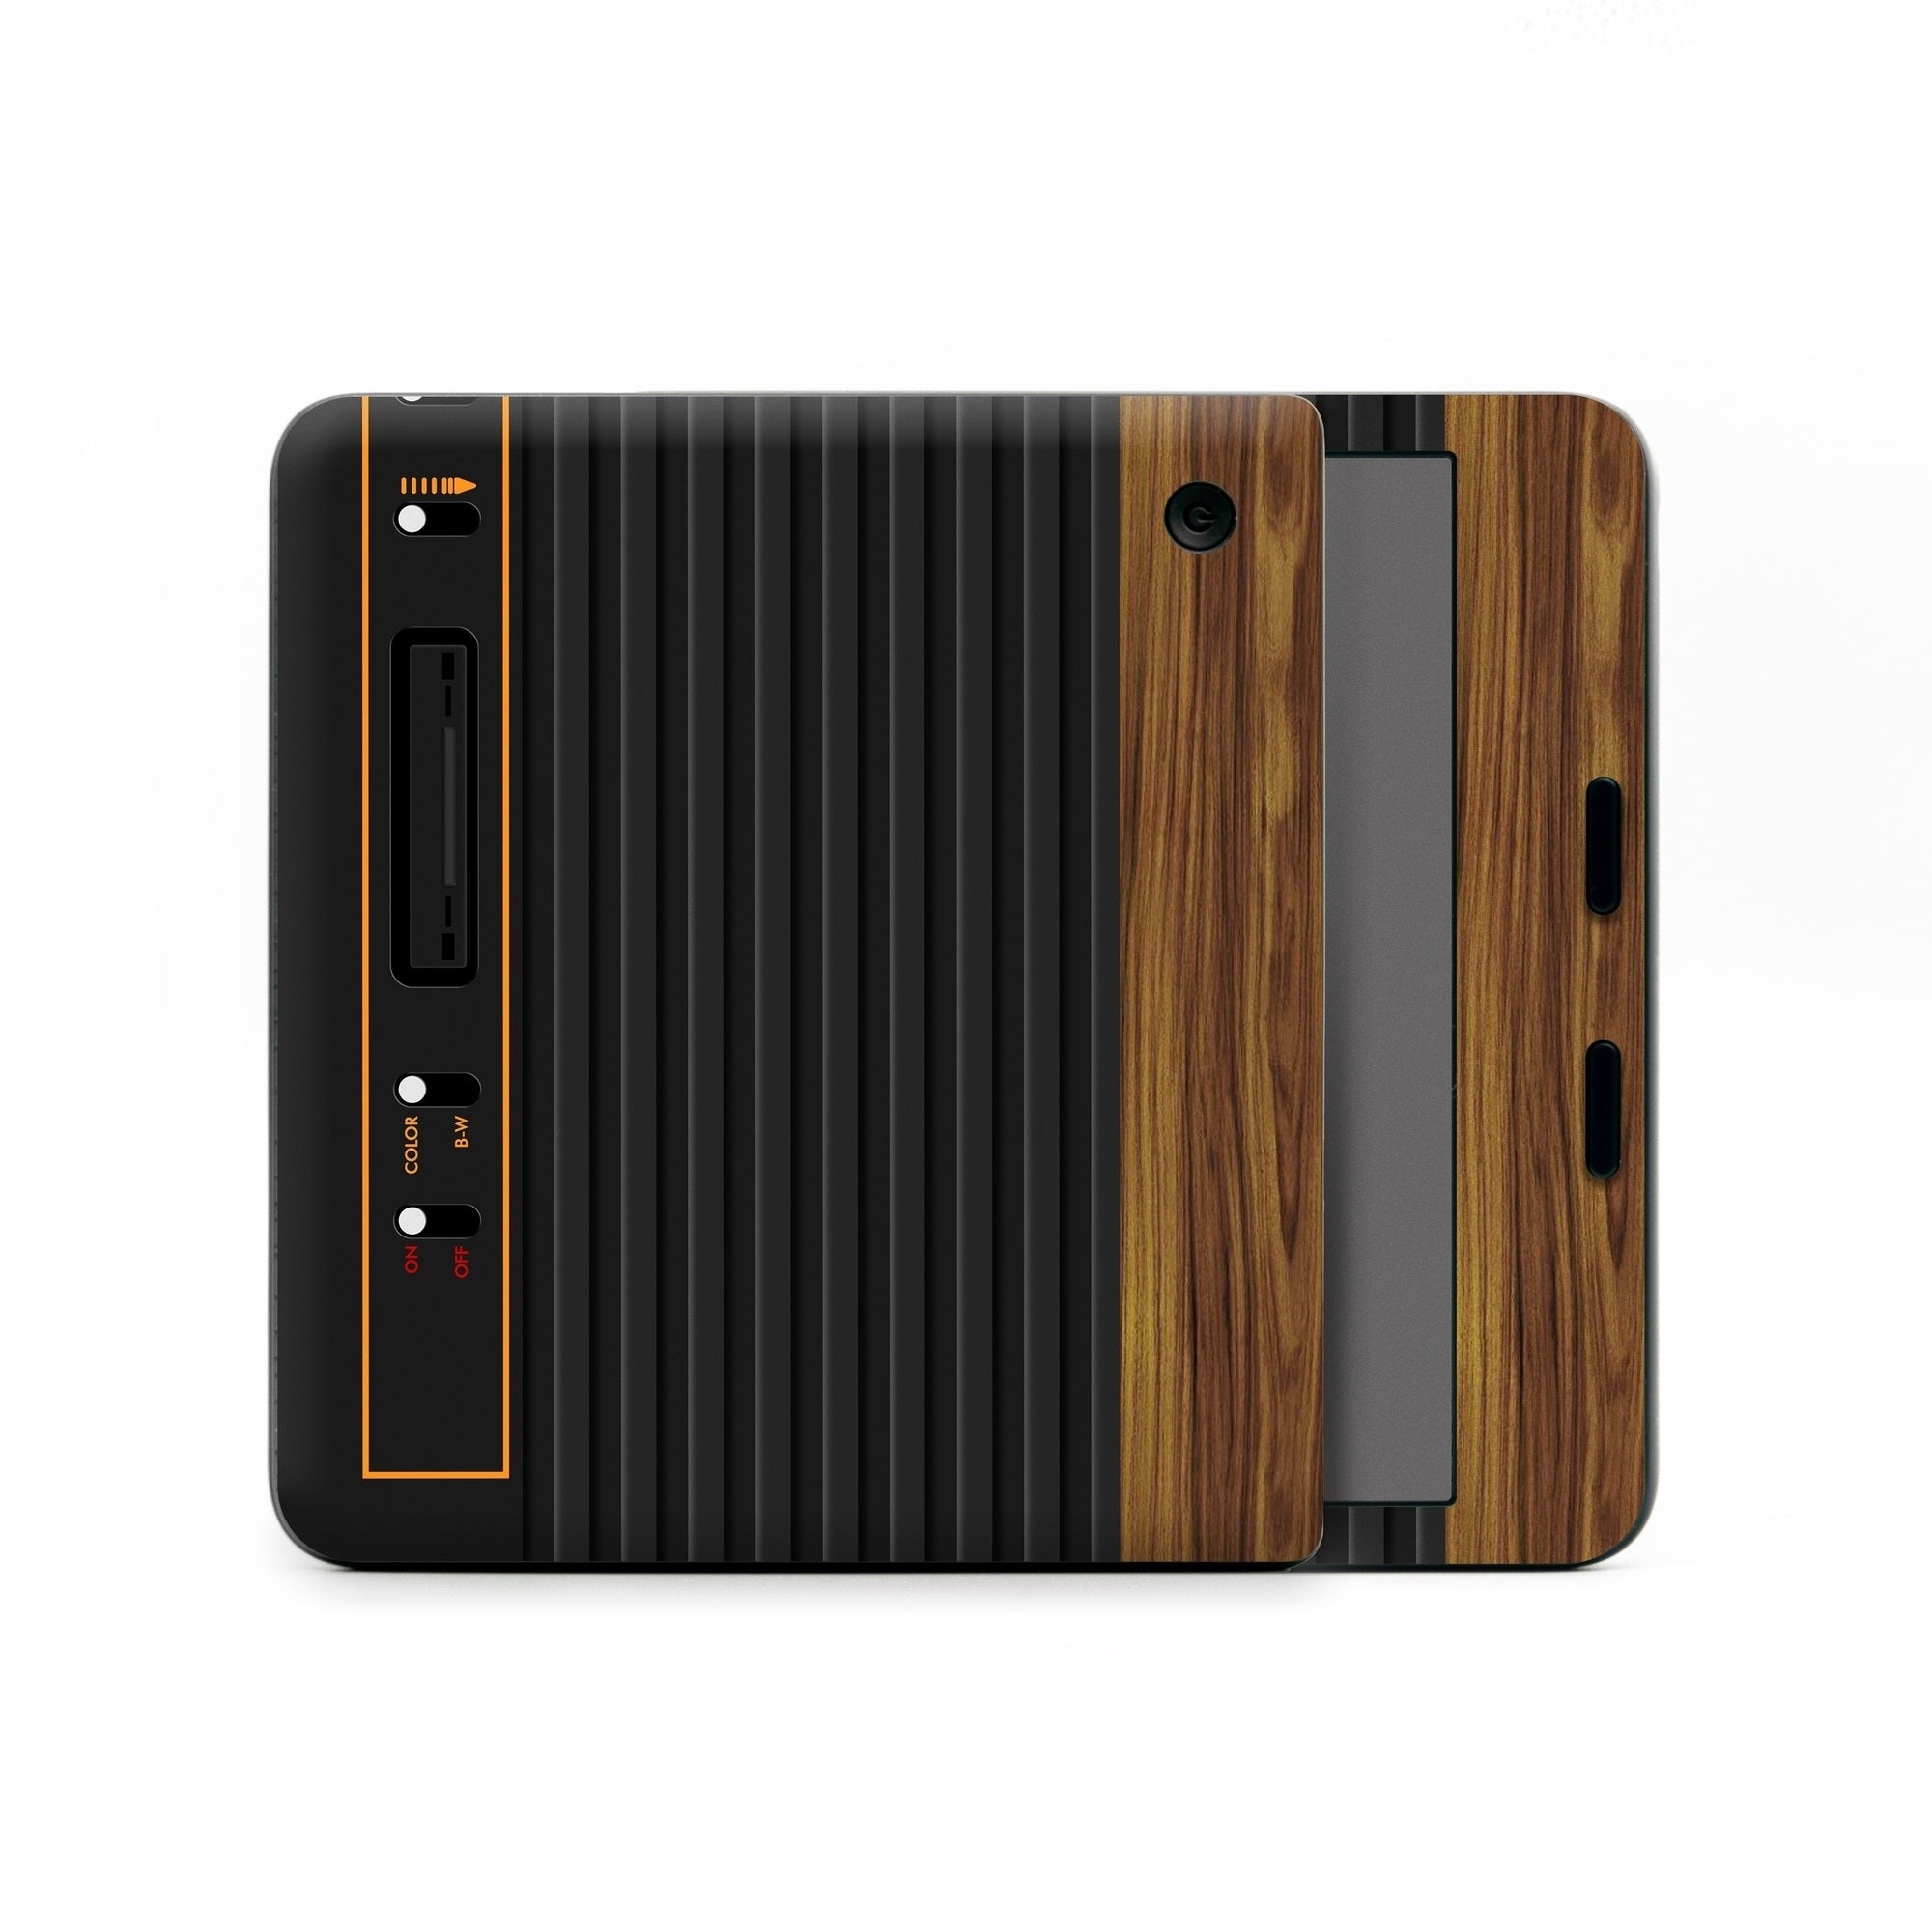 Wooden Gaming System - Kobo Libra Colour Skin